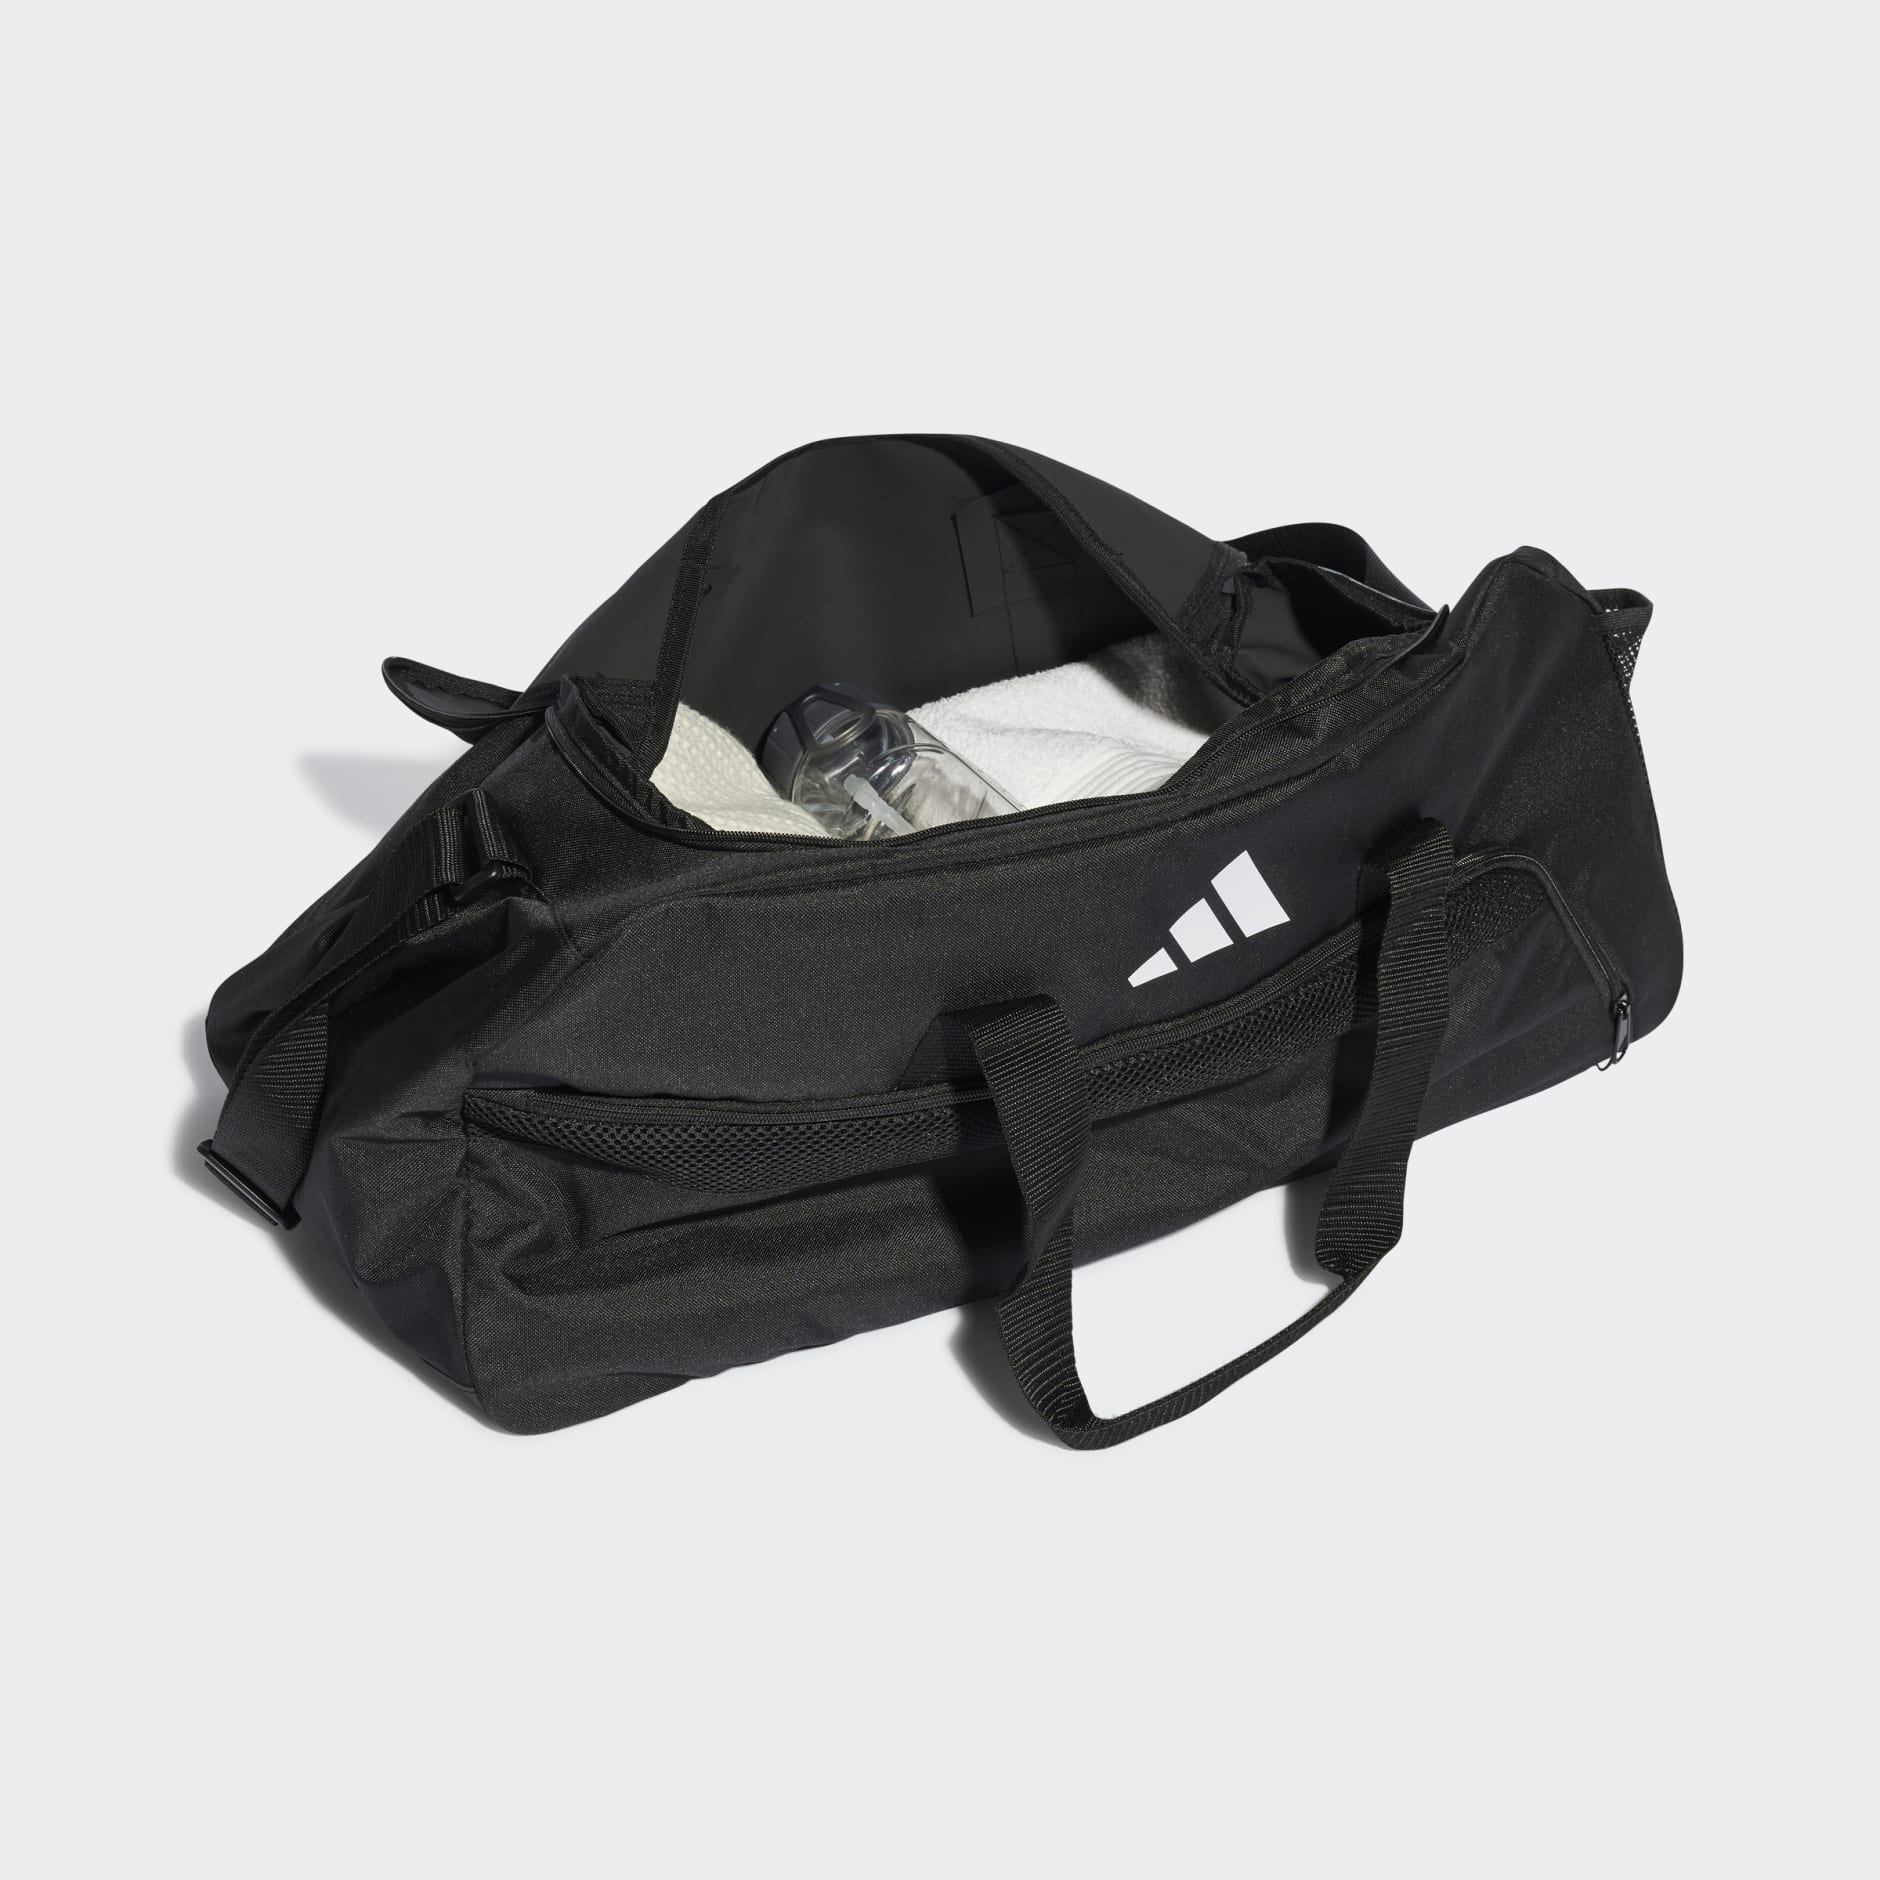 Backpack adidas Tiro 23 League - adidas - Bags - Equipment